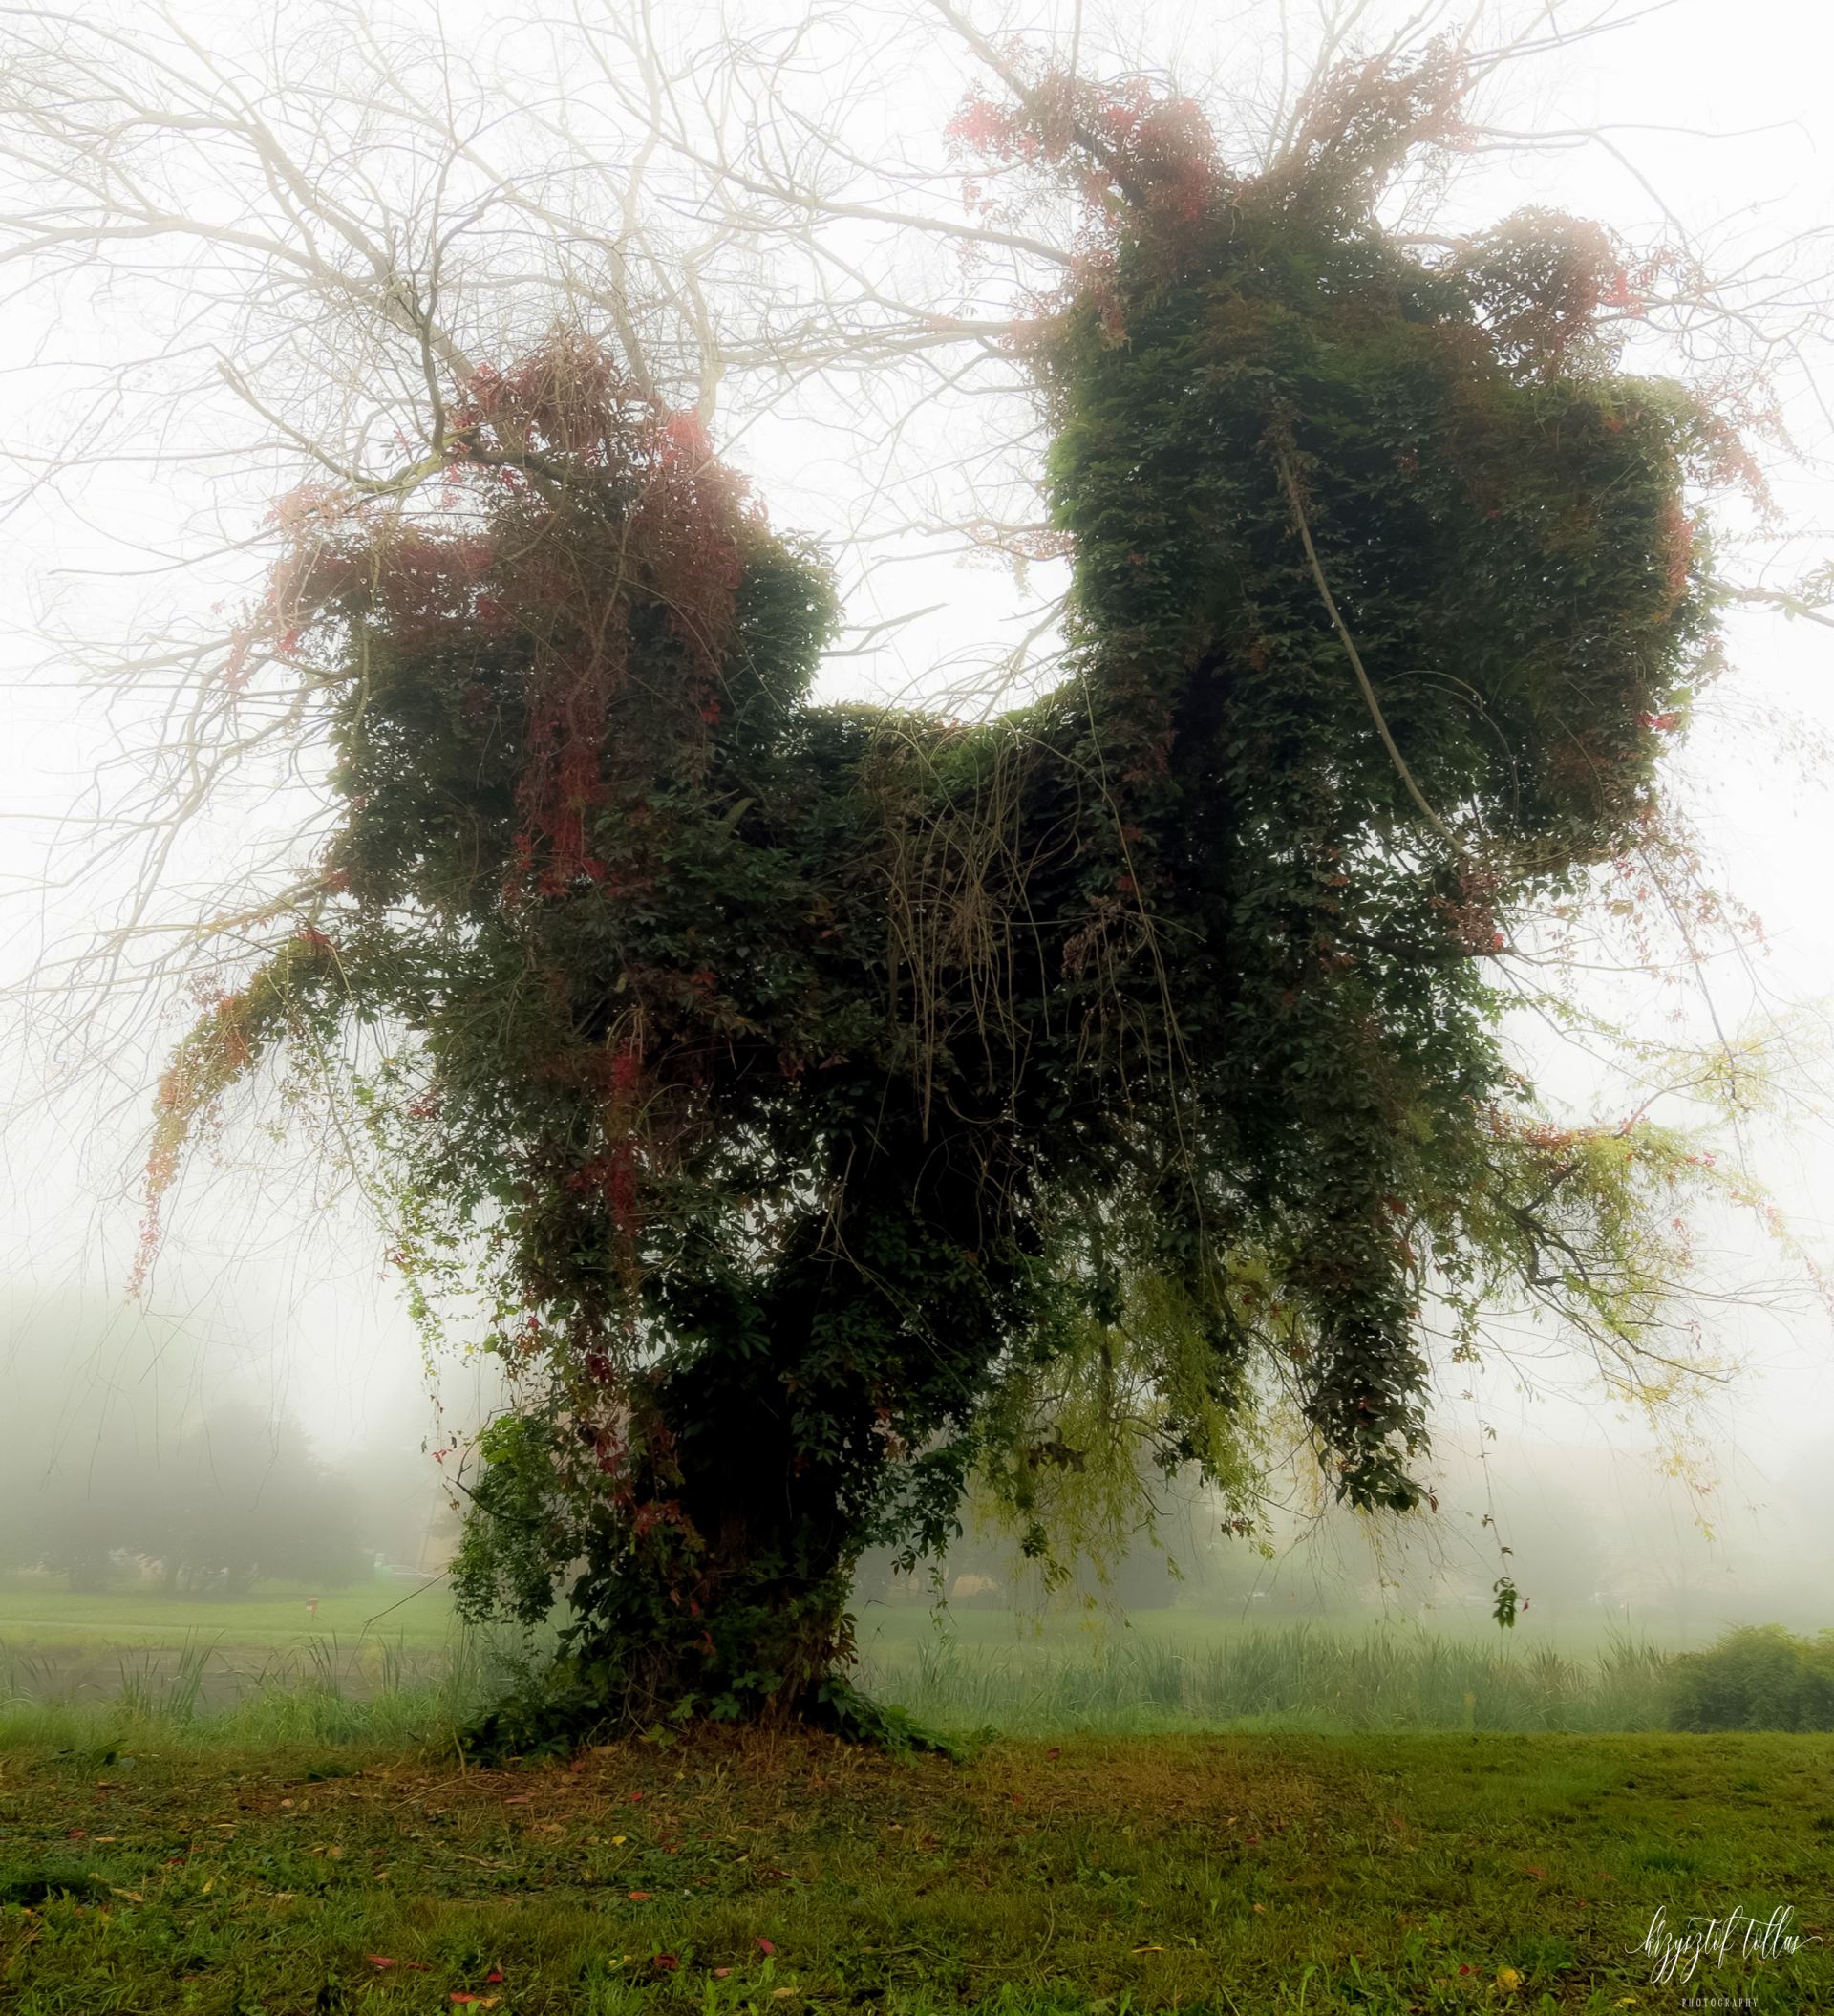 Tree  nature  fog  melancholy  autumn  morning  atmosphere  ivy  landscape  light  mist  nikon  Landscape - Scenery, Krzysztof Tollas